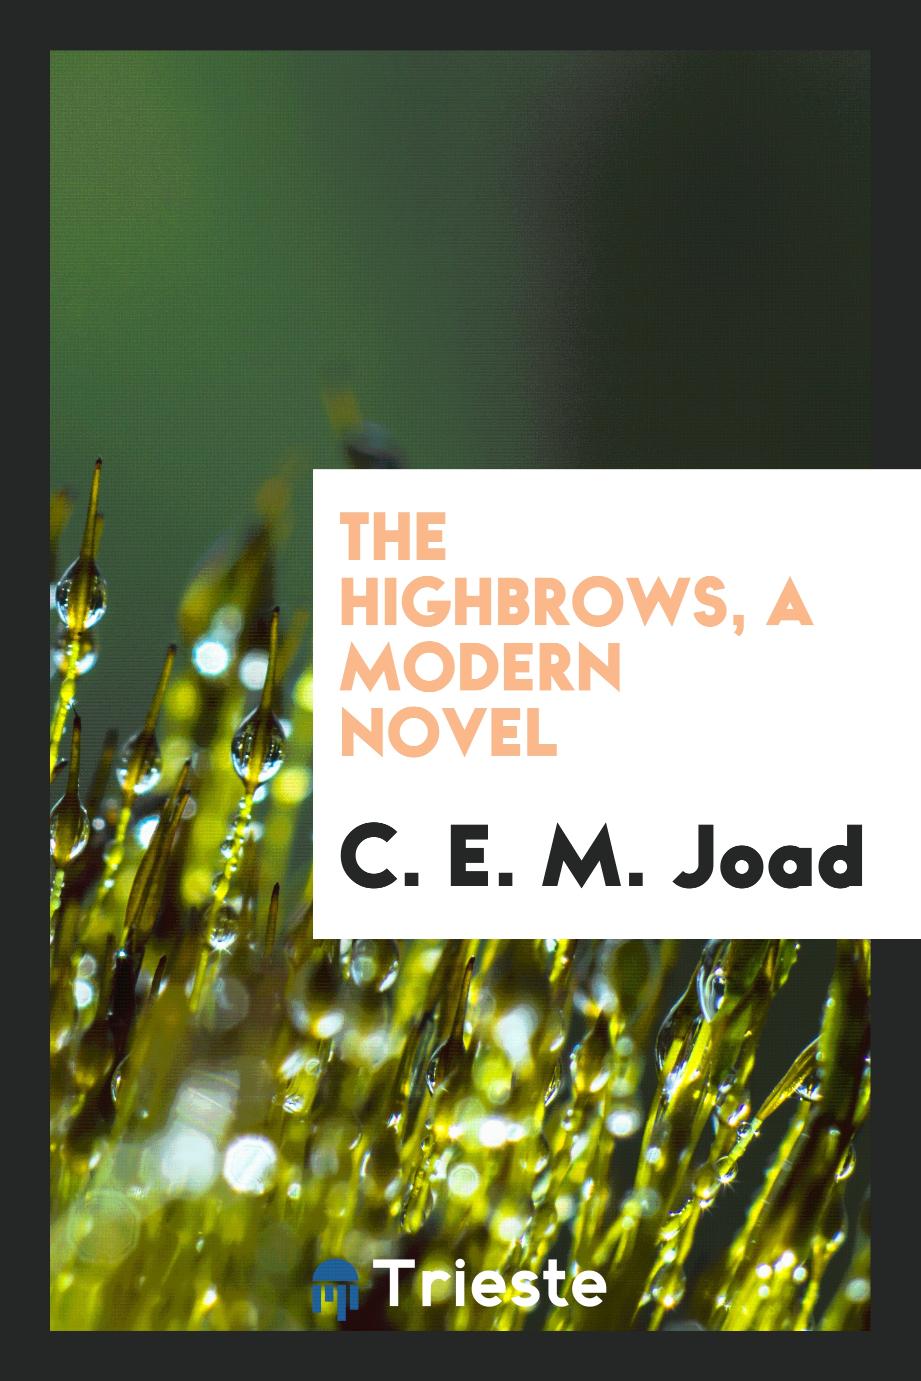 The highbrows, a modern novel